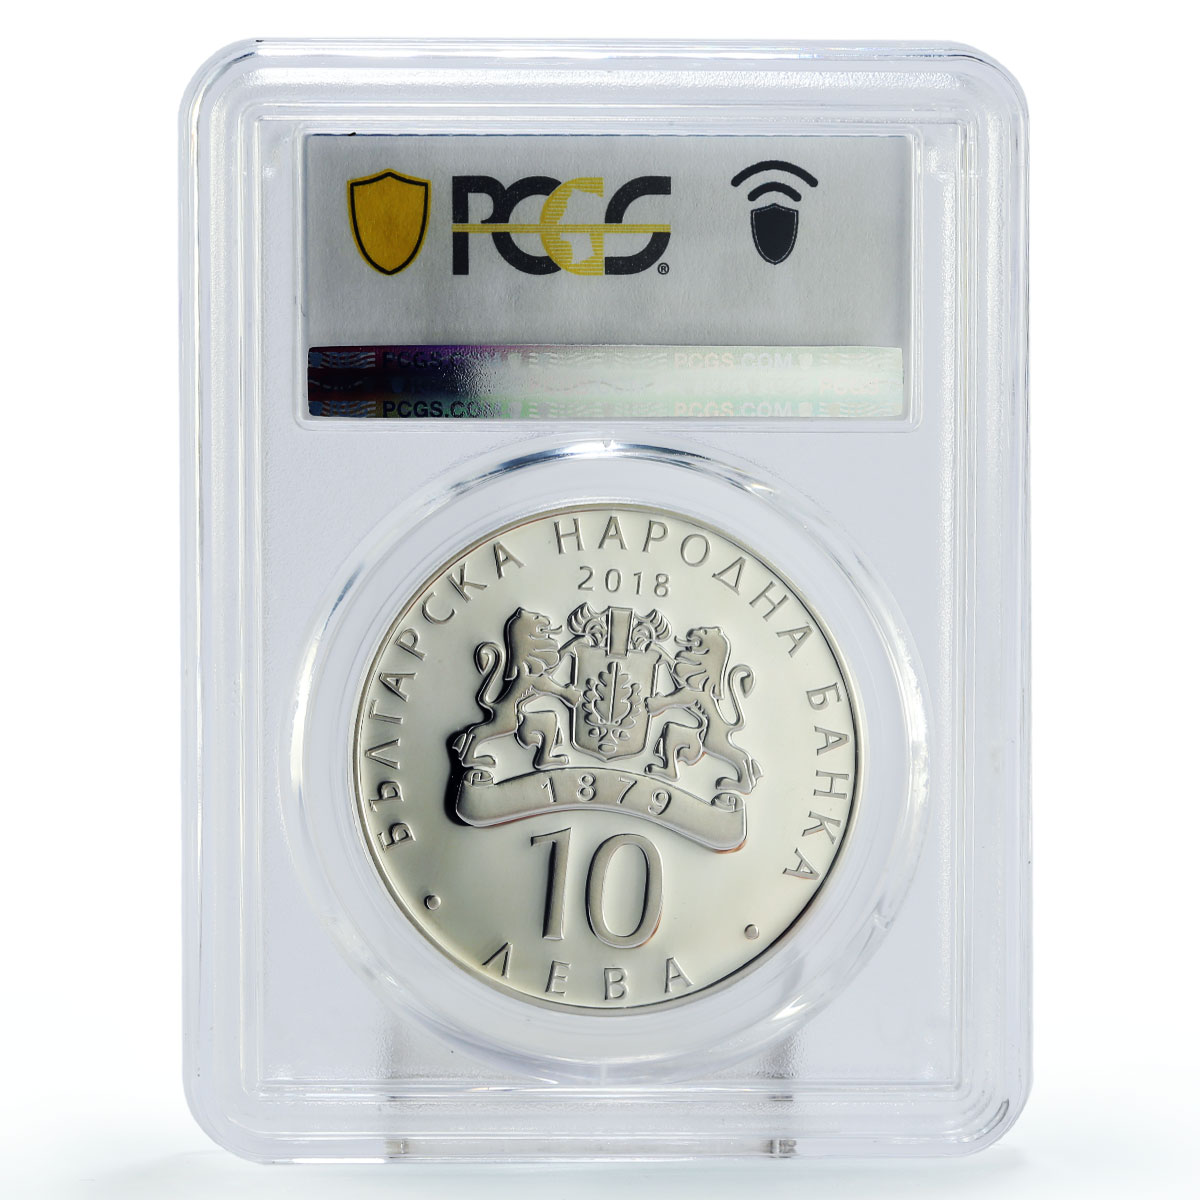 Bulgaria 10 leva Liberation from Ottoman Empire PR69 PCGS silver coin 2018